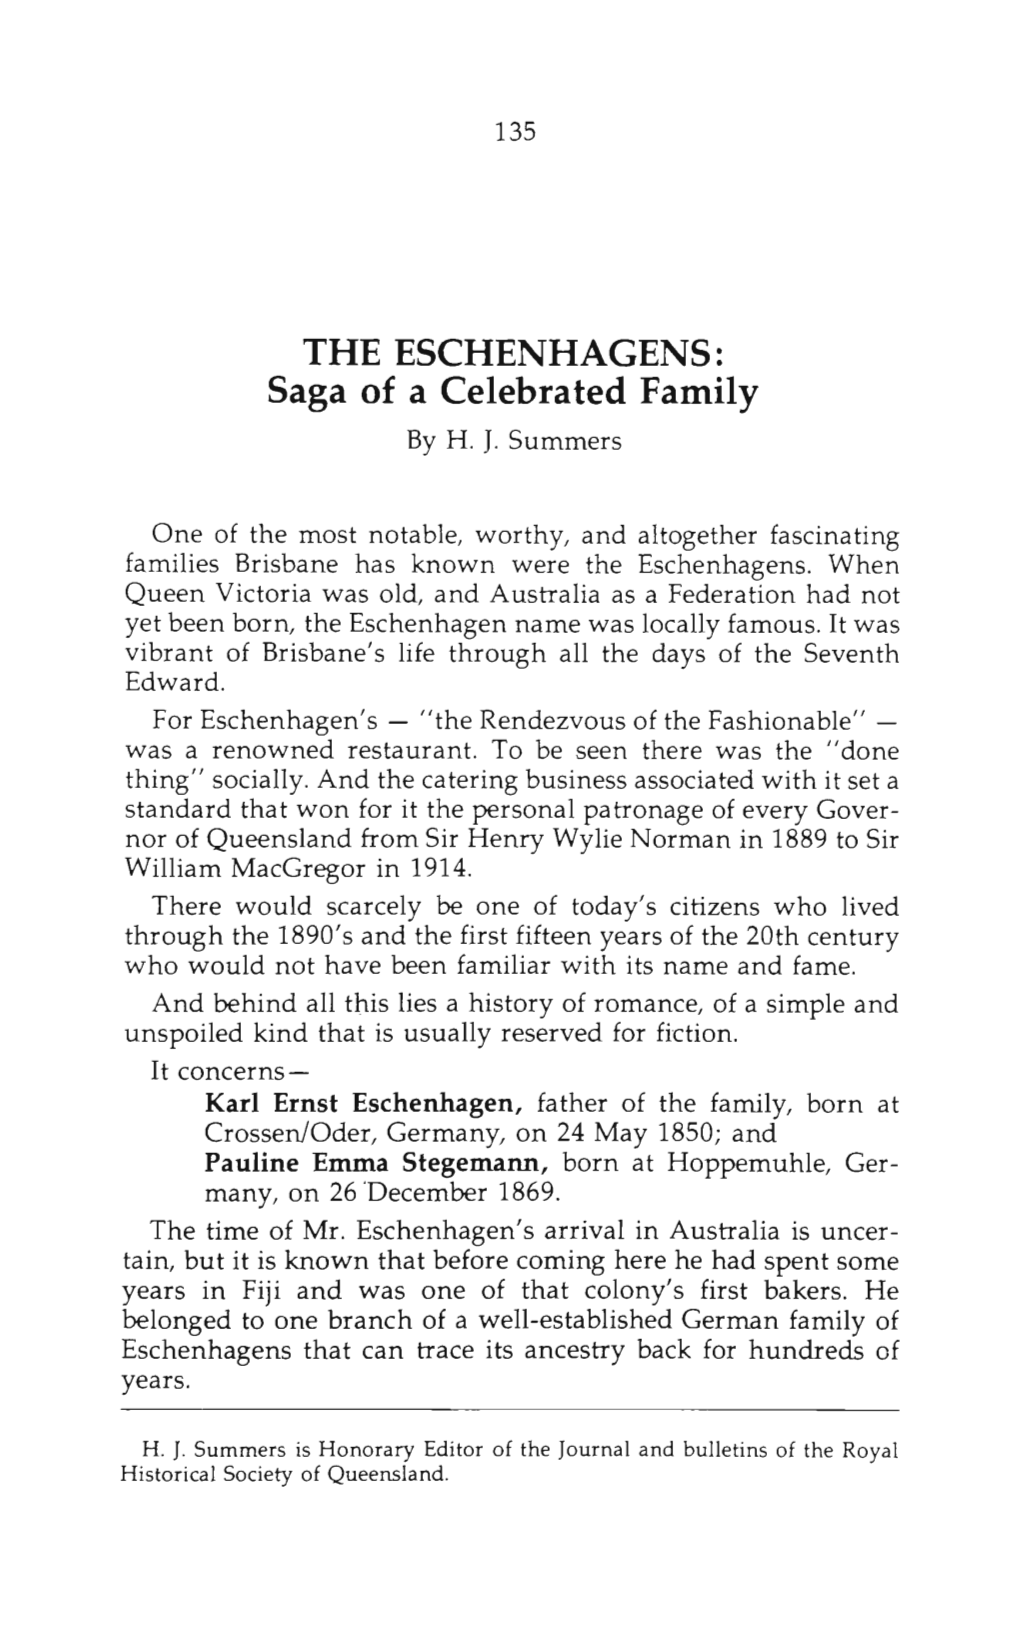 THE ESCHENHAGENS: Saga of a Celebrated Family by H